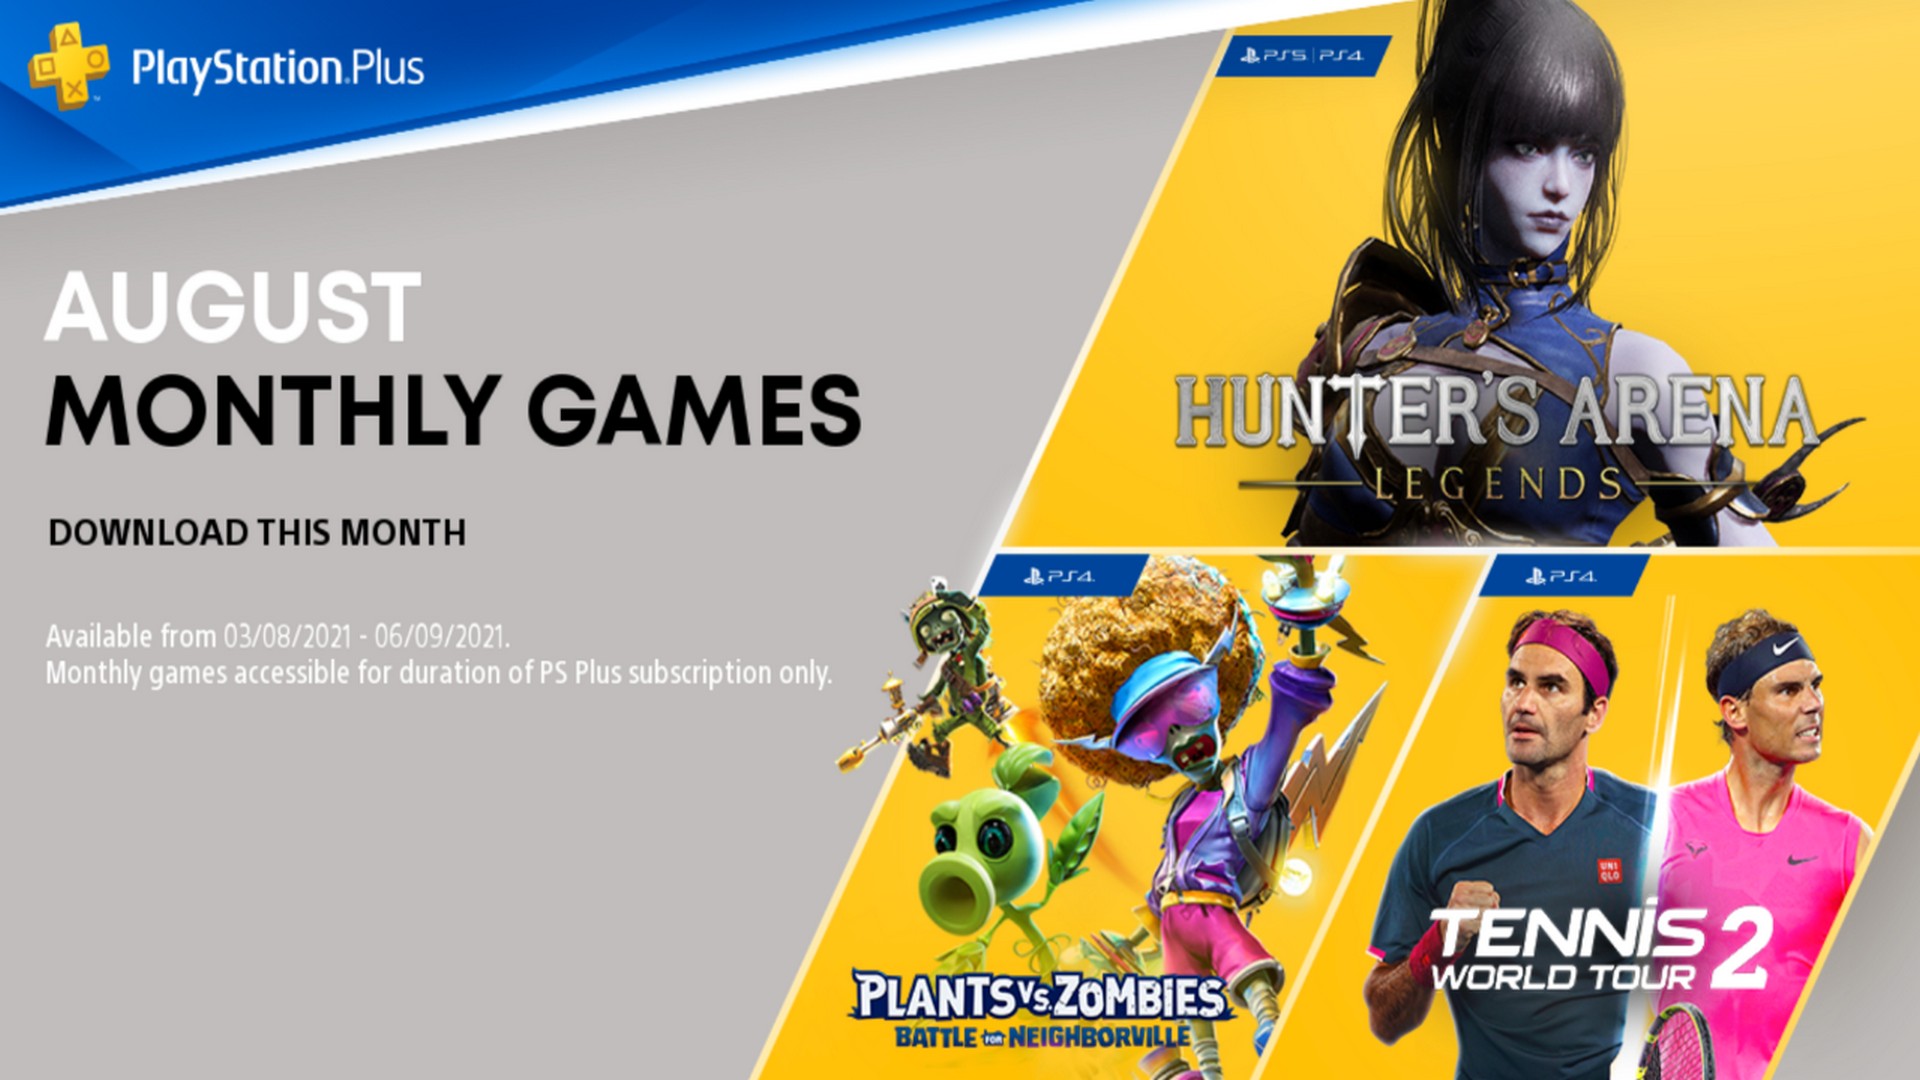 PlayStation Plus August Games Lineup Hunter’s Arena Legends, Plants